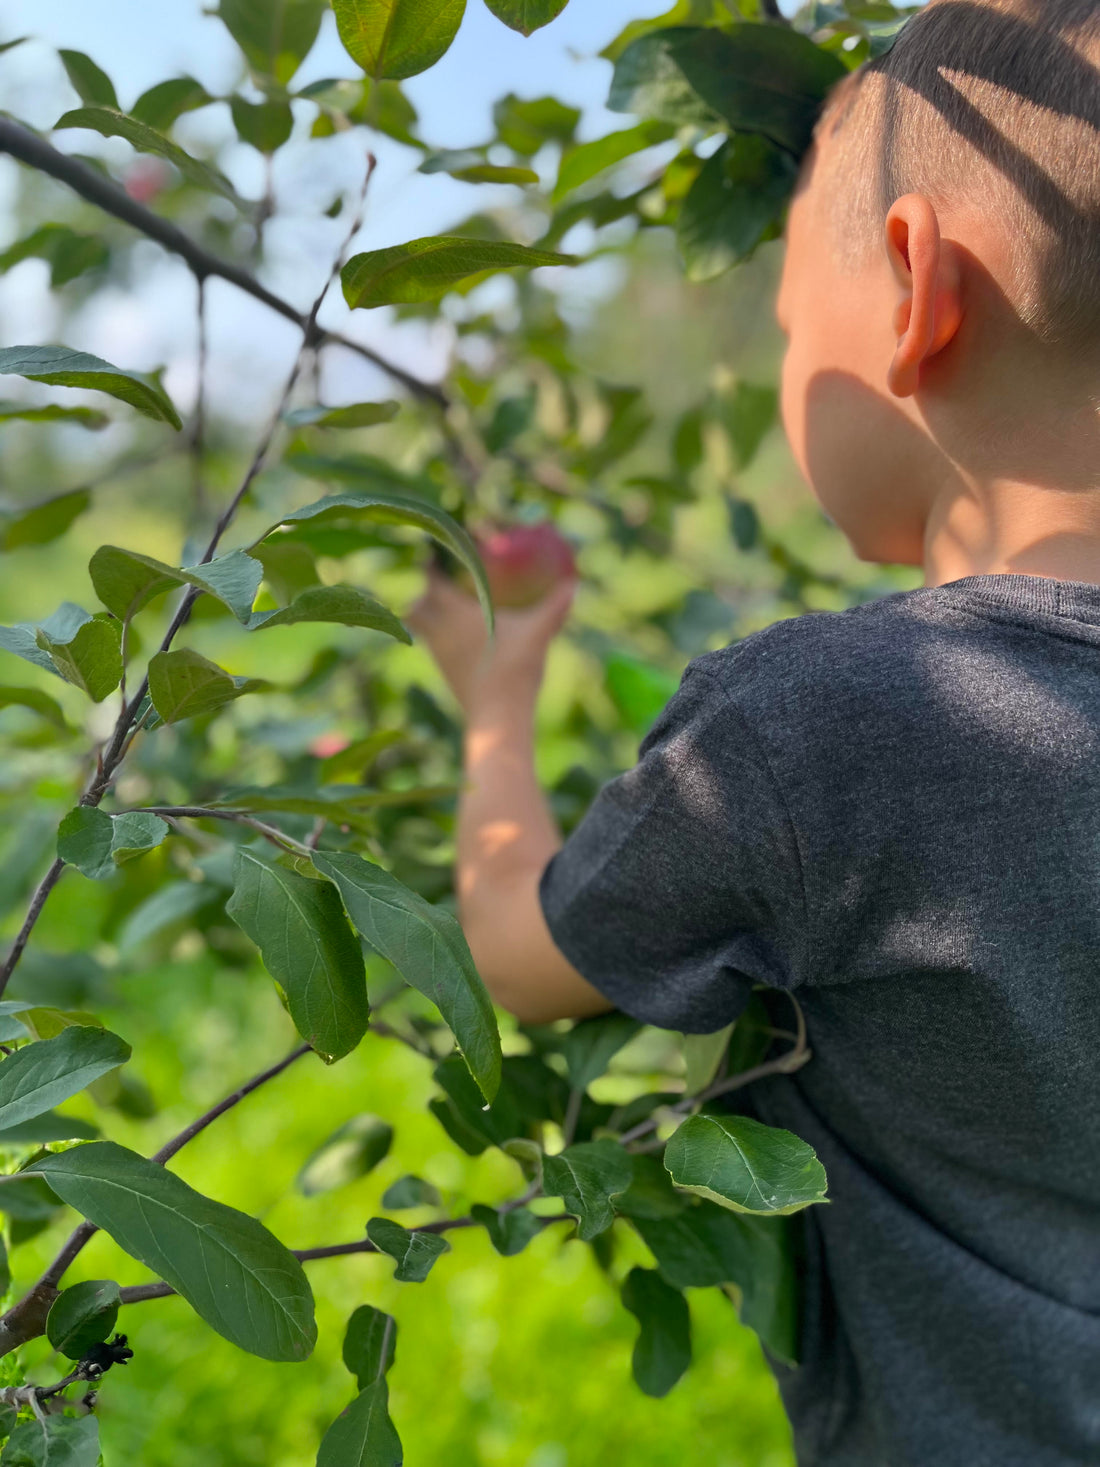 Jacqueline's Son Picking Apples